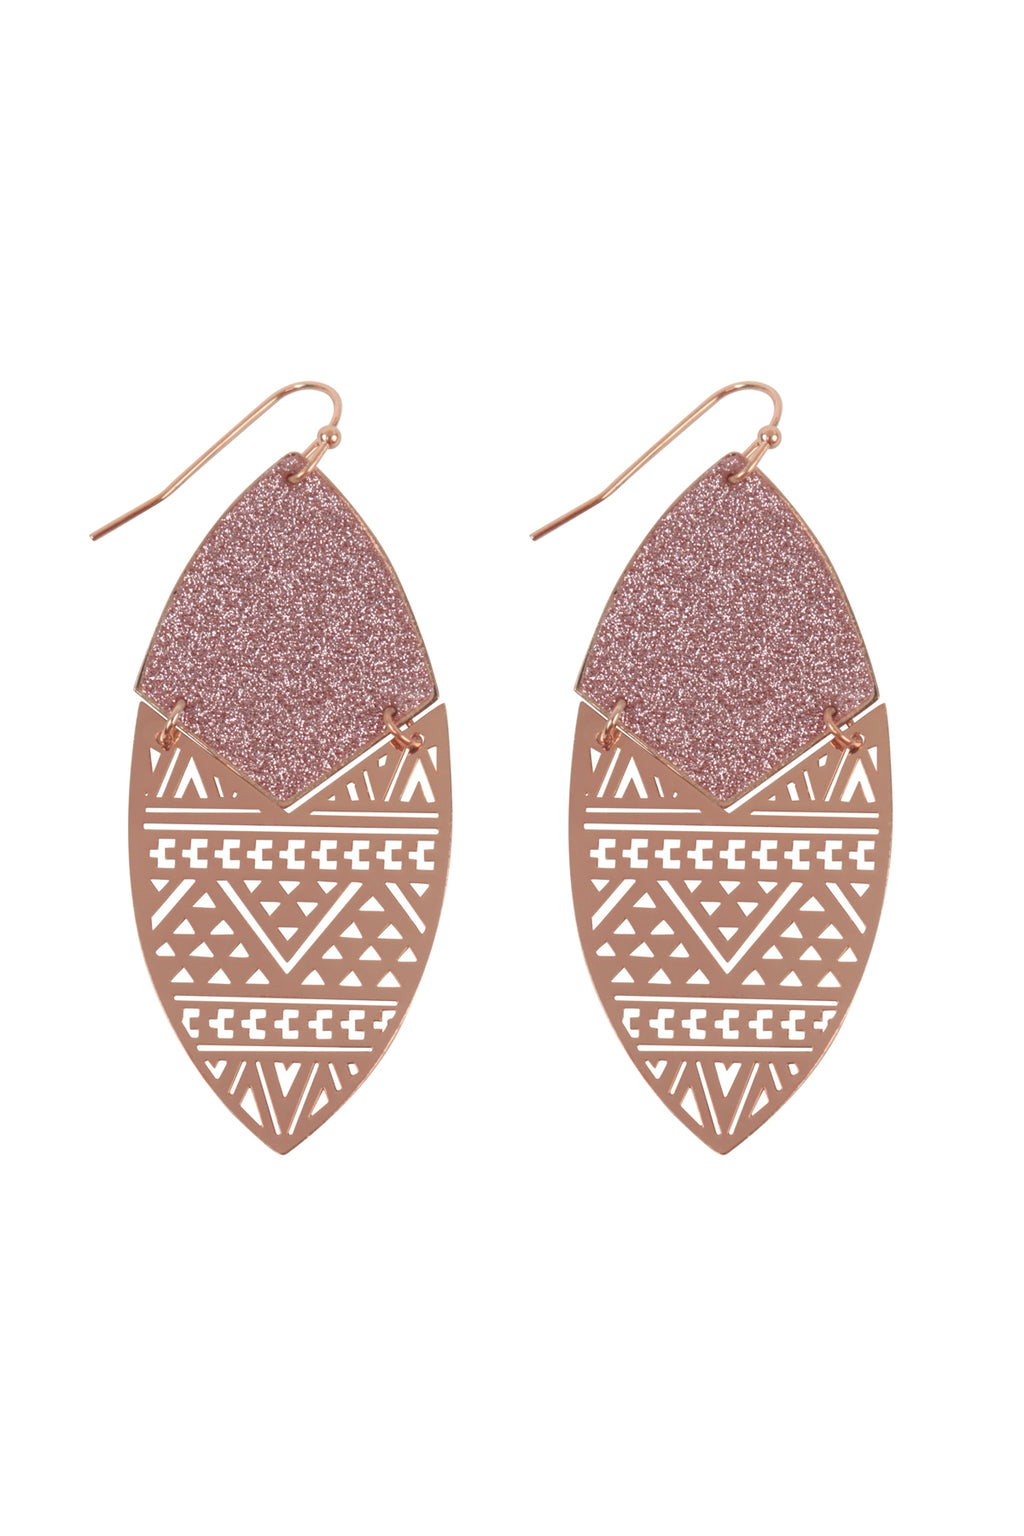 Sand Sticker Marquise Tribal Filigree Earrings Rose Gold - Pack of 6